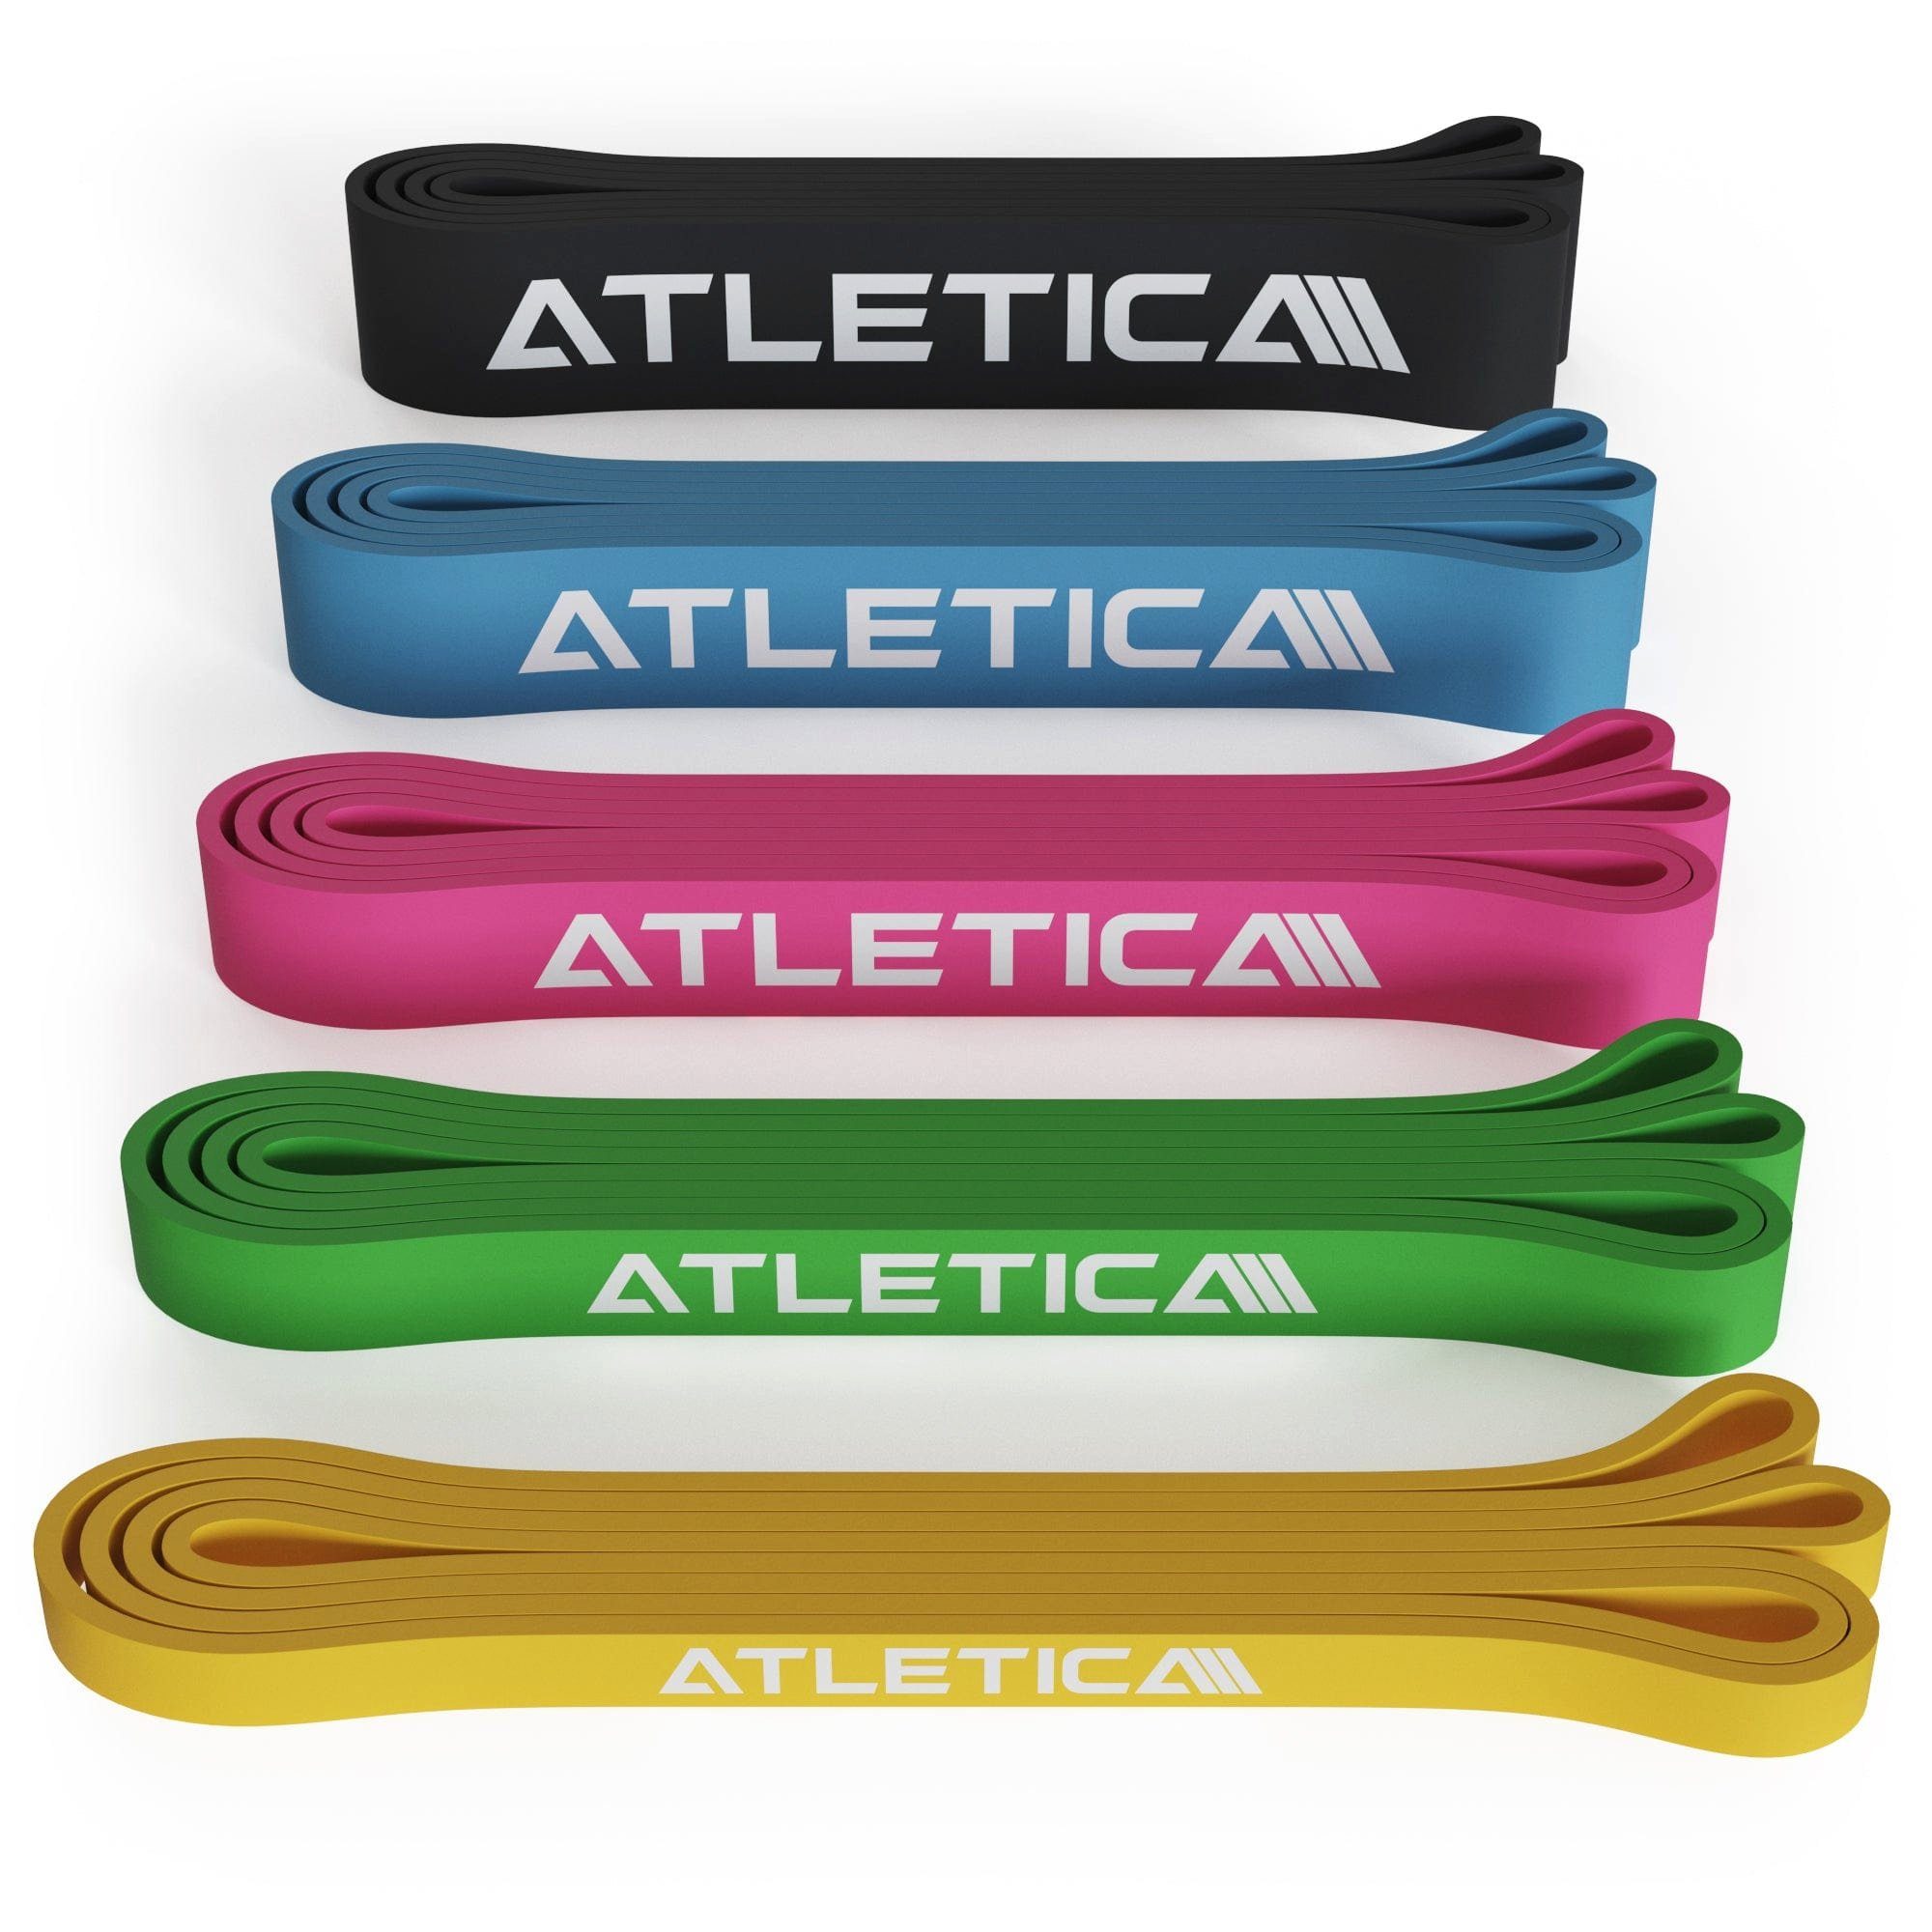 ATLETICA Resistance Bands, Volles Set Volles Set, Alle 5 Stärken, 100% Latex Fitnessband | Smartwatches